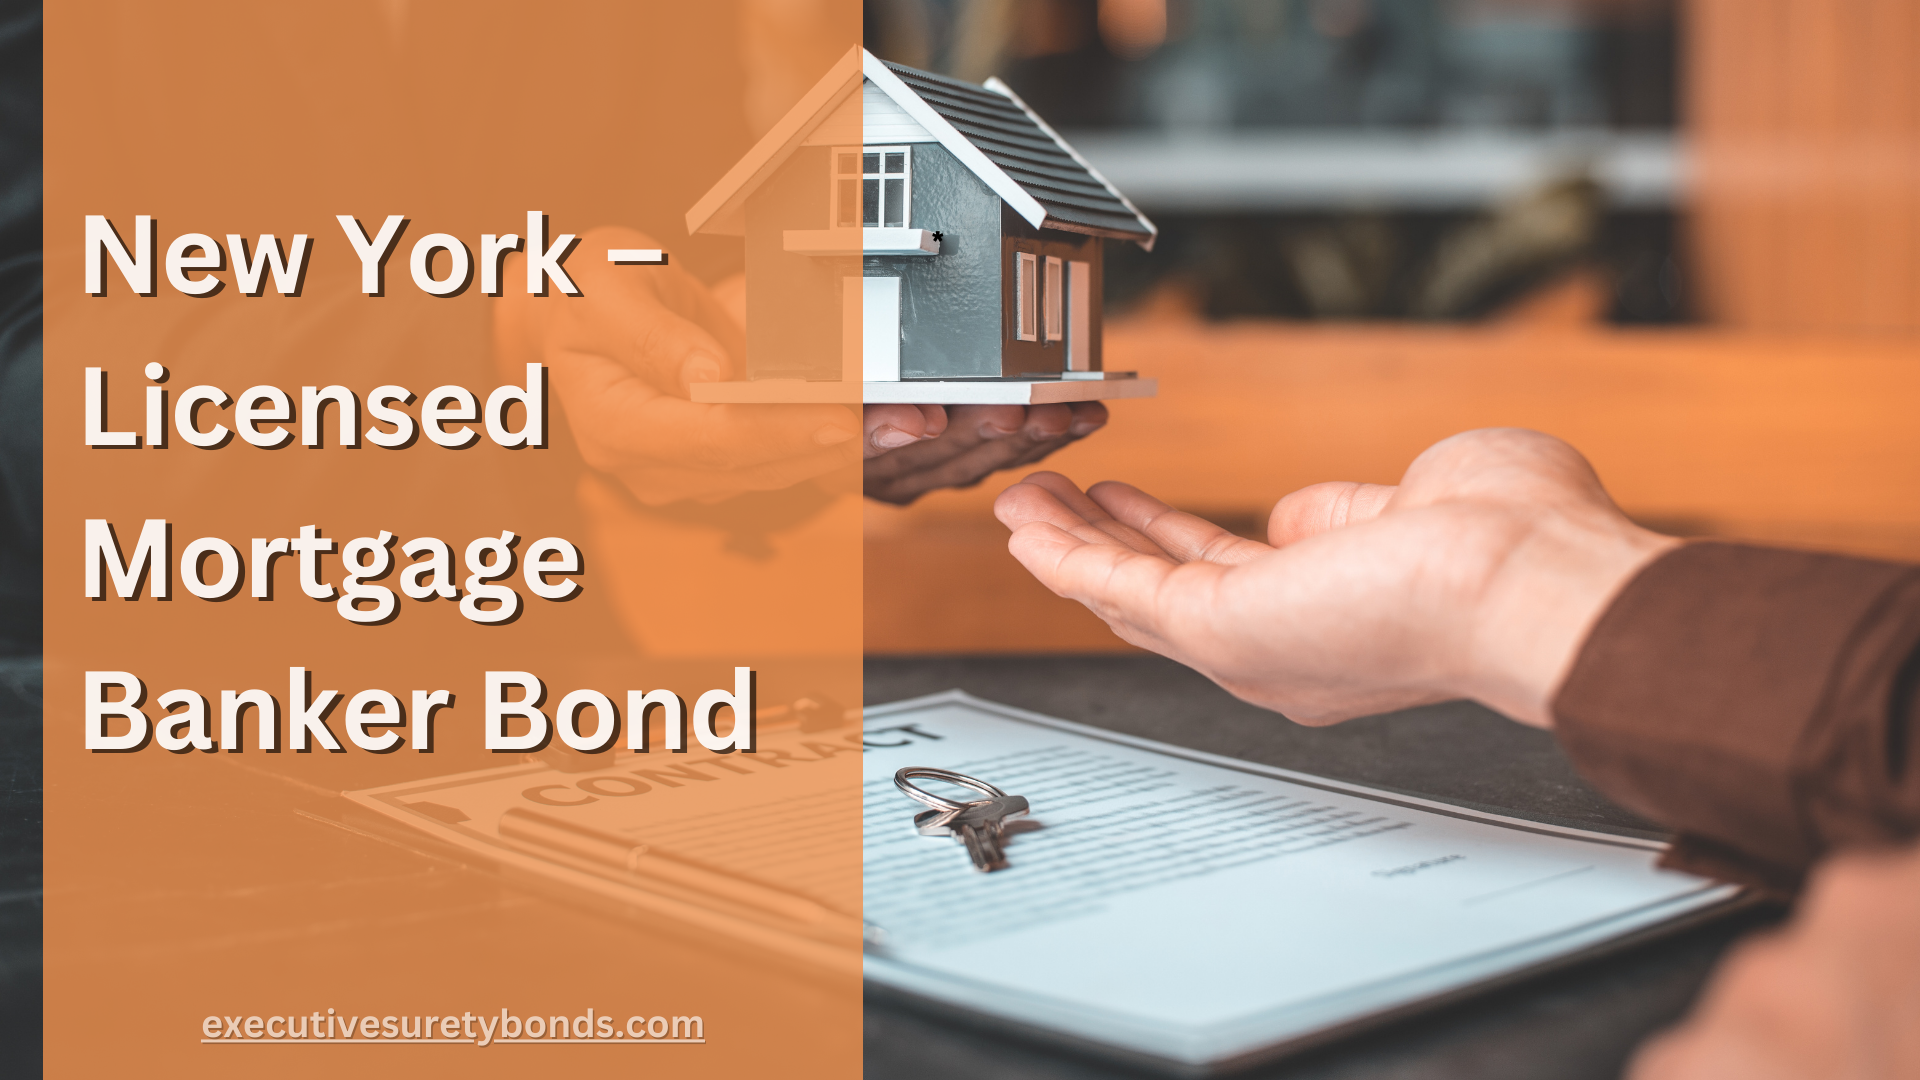 New York – Licensed Mortgage Banker Bond